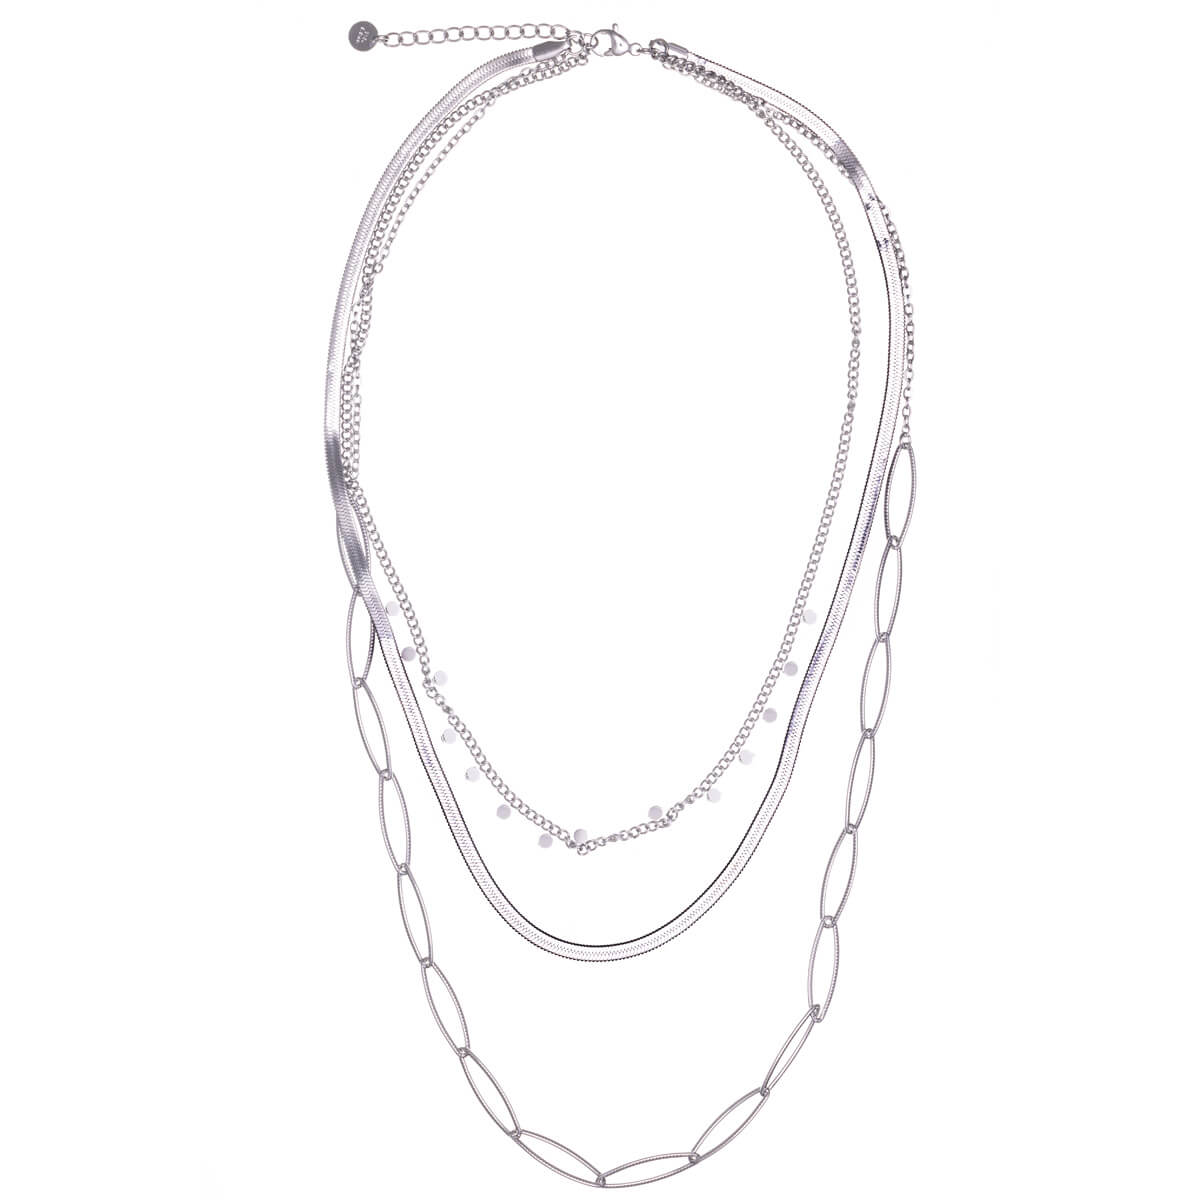 Three-row necklace necklace 39cm-53cm (Steel 316L)